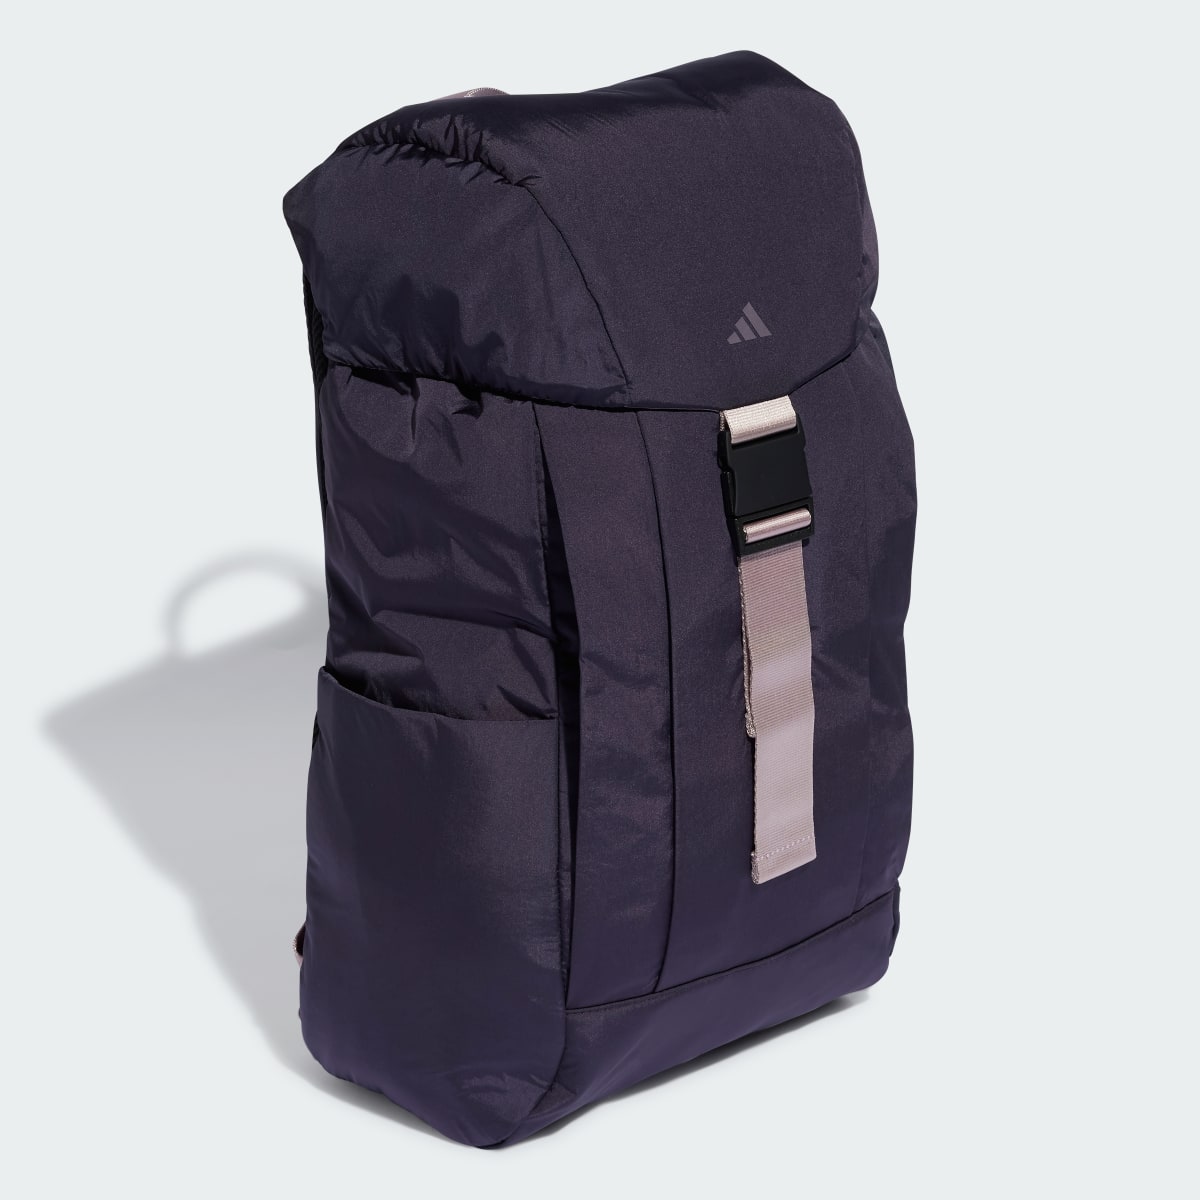 Adidas Gym HIIT Backpack. 4